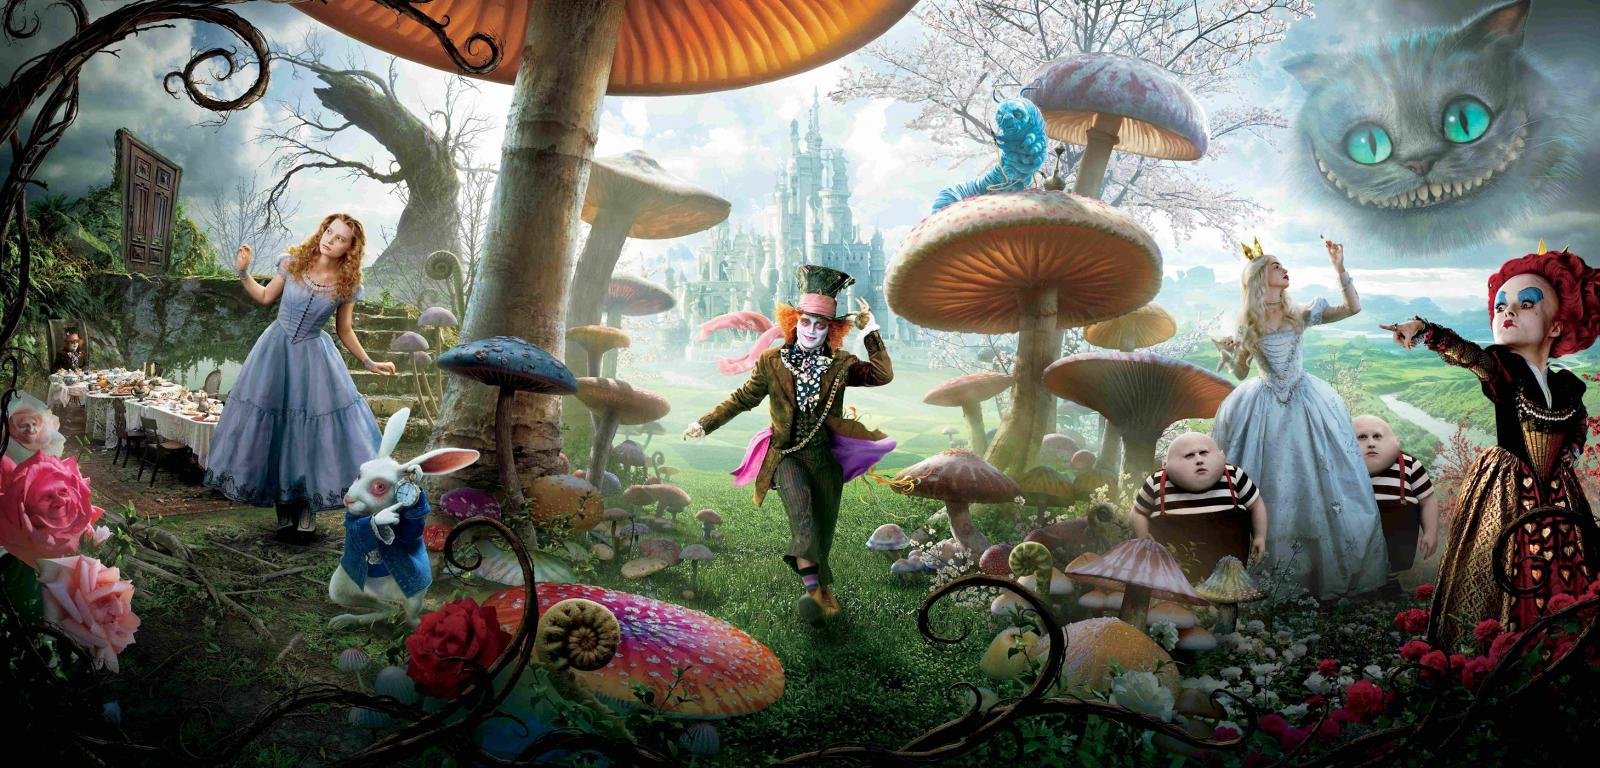 Best Alice In Wonderland wallpaper ID:142940 for High Resolution hd 1600x768 desktop